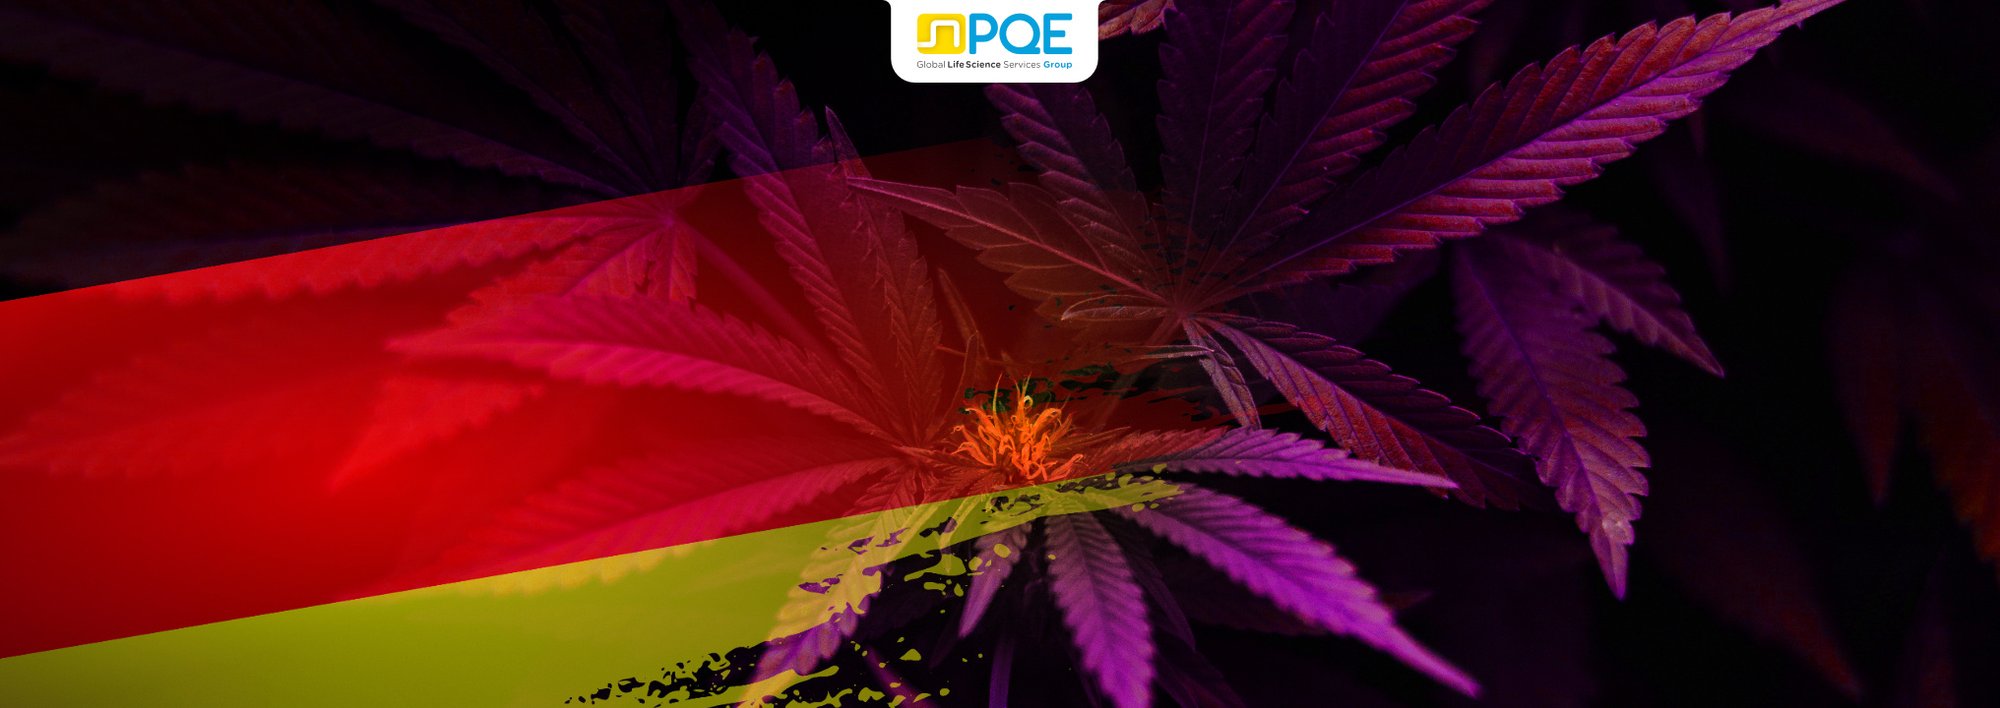 Cannabis Revolution Germany_Site PQE